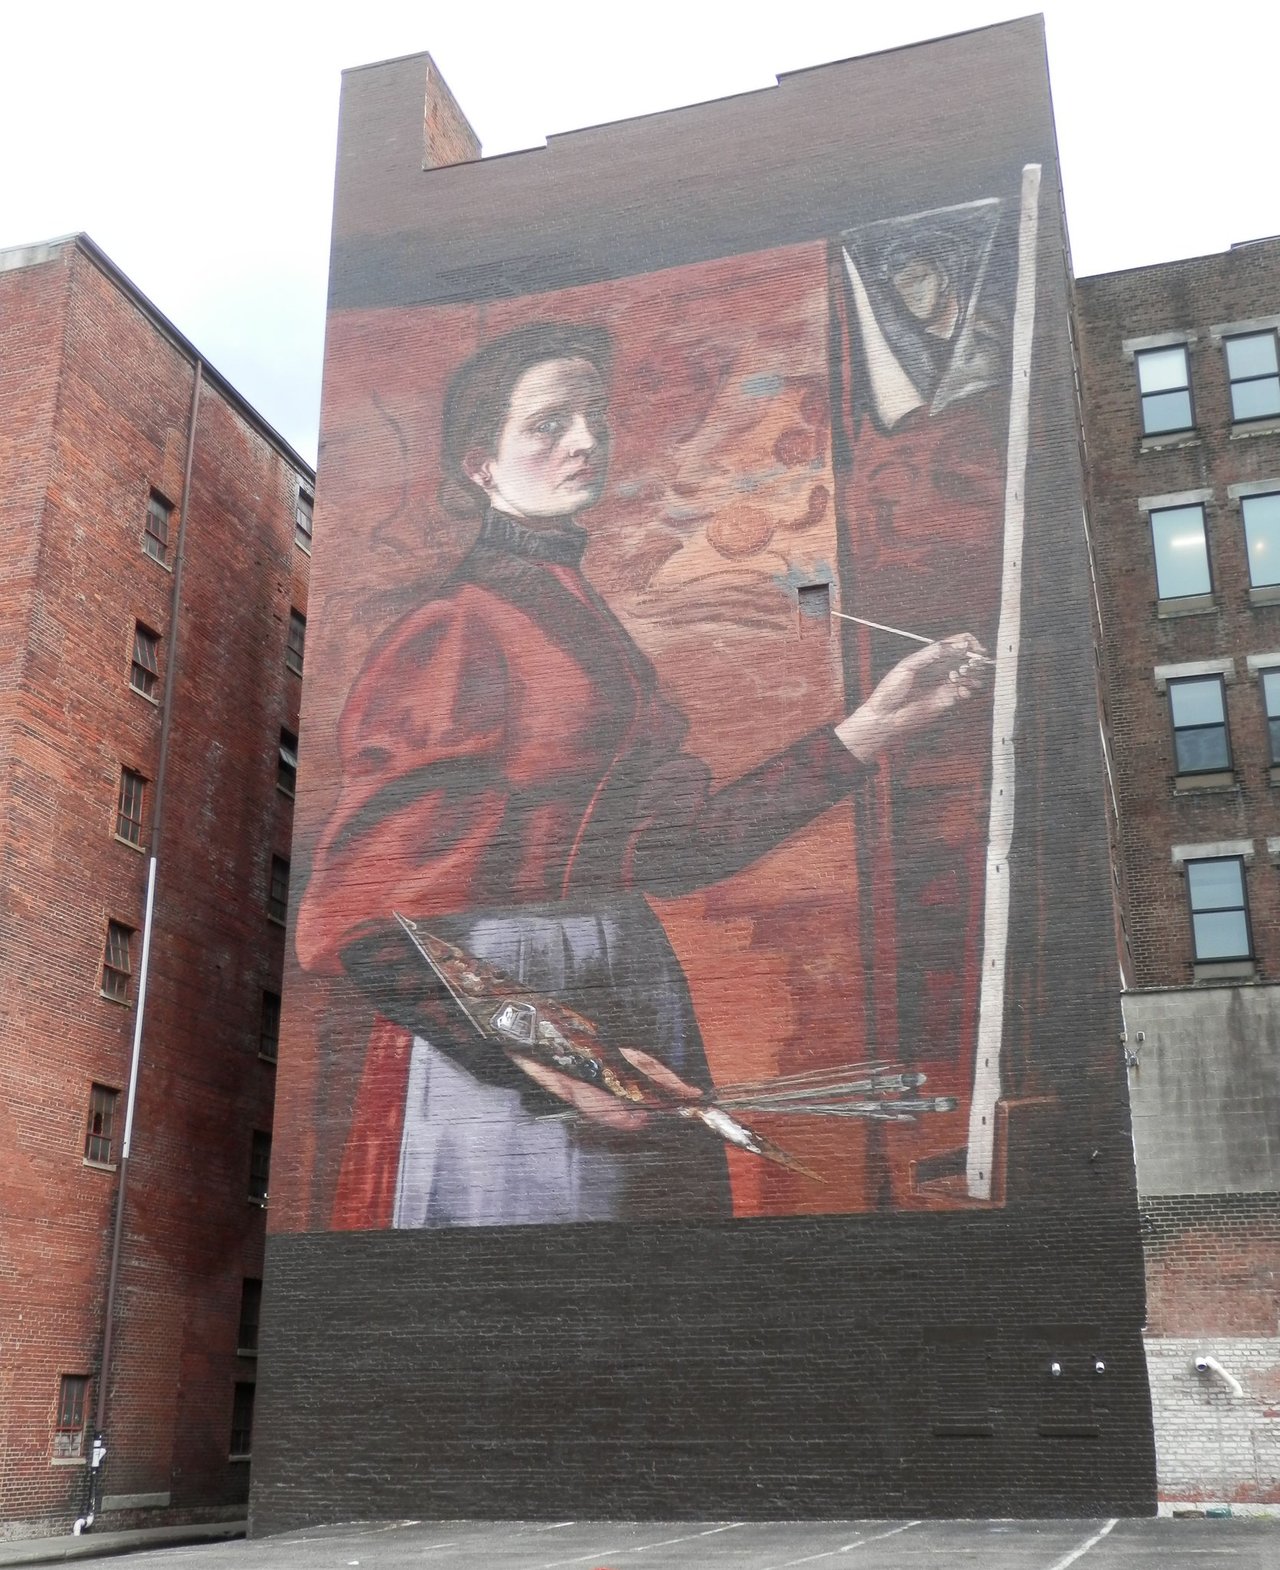 #StreetartSaturday #Graffiti #Cincinnati #Streetart A 5-story painting on brick, of a woman painting. https://t.co/l3jUghs7wH